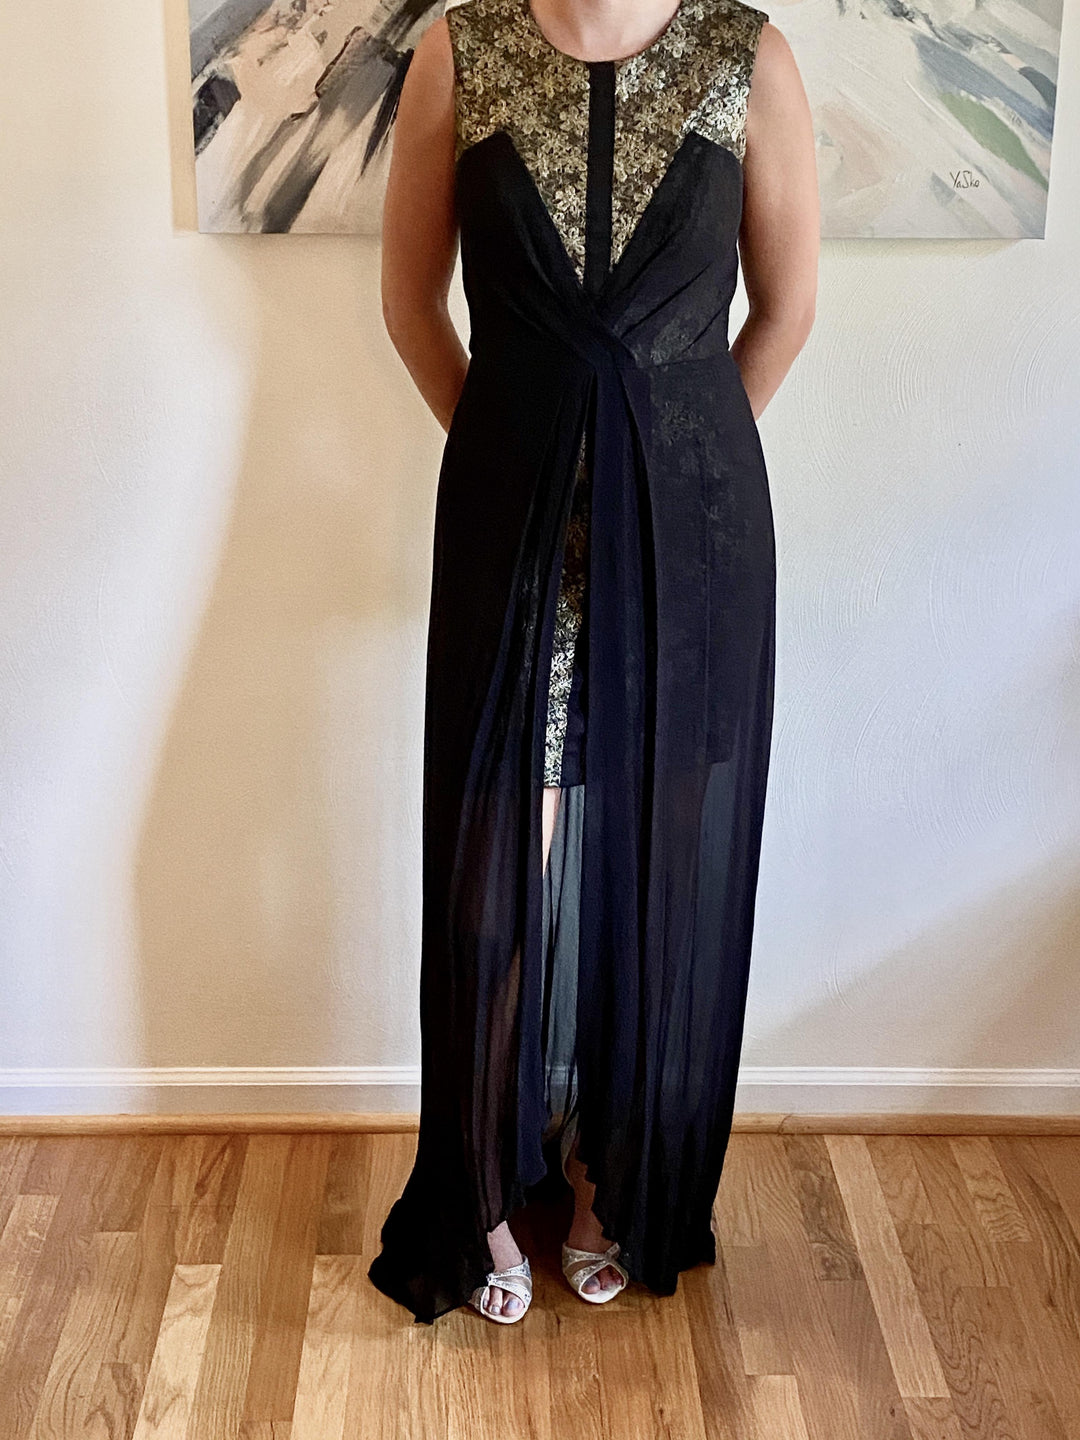 Nicole Miller Atelier Formal Gown